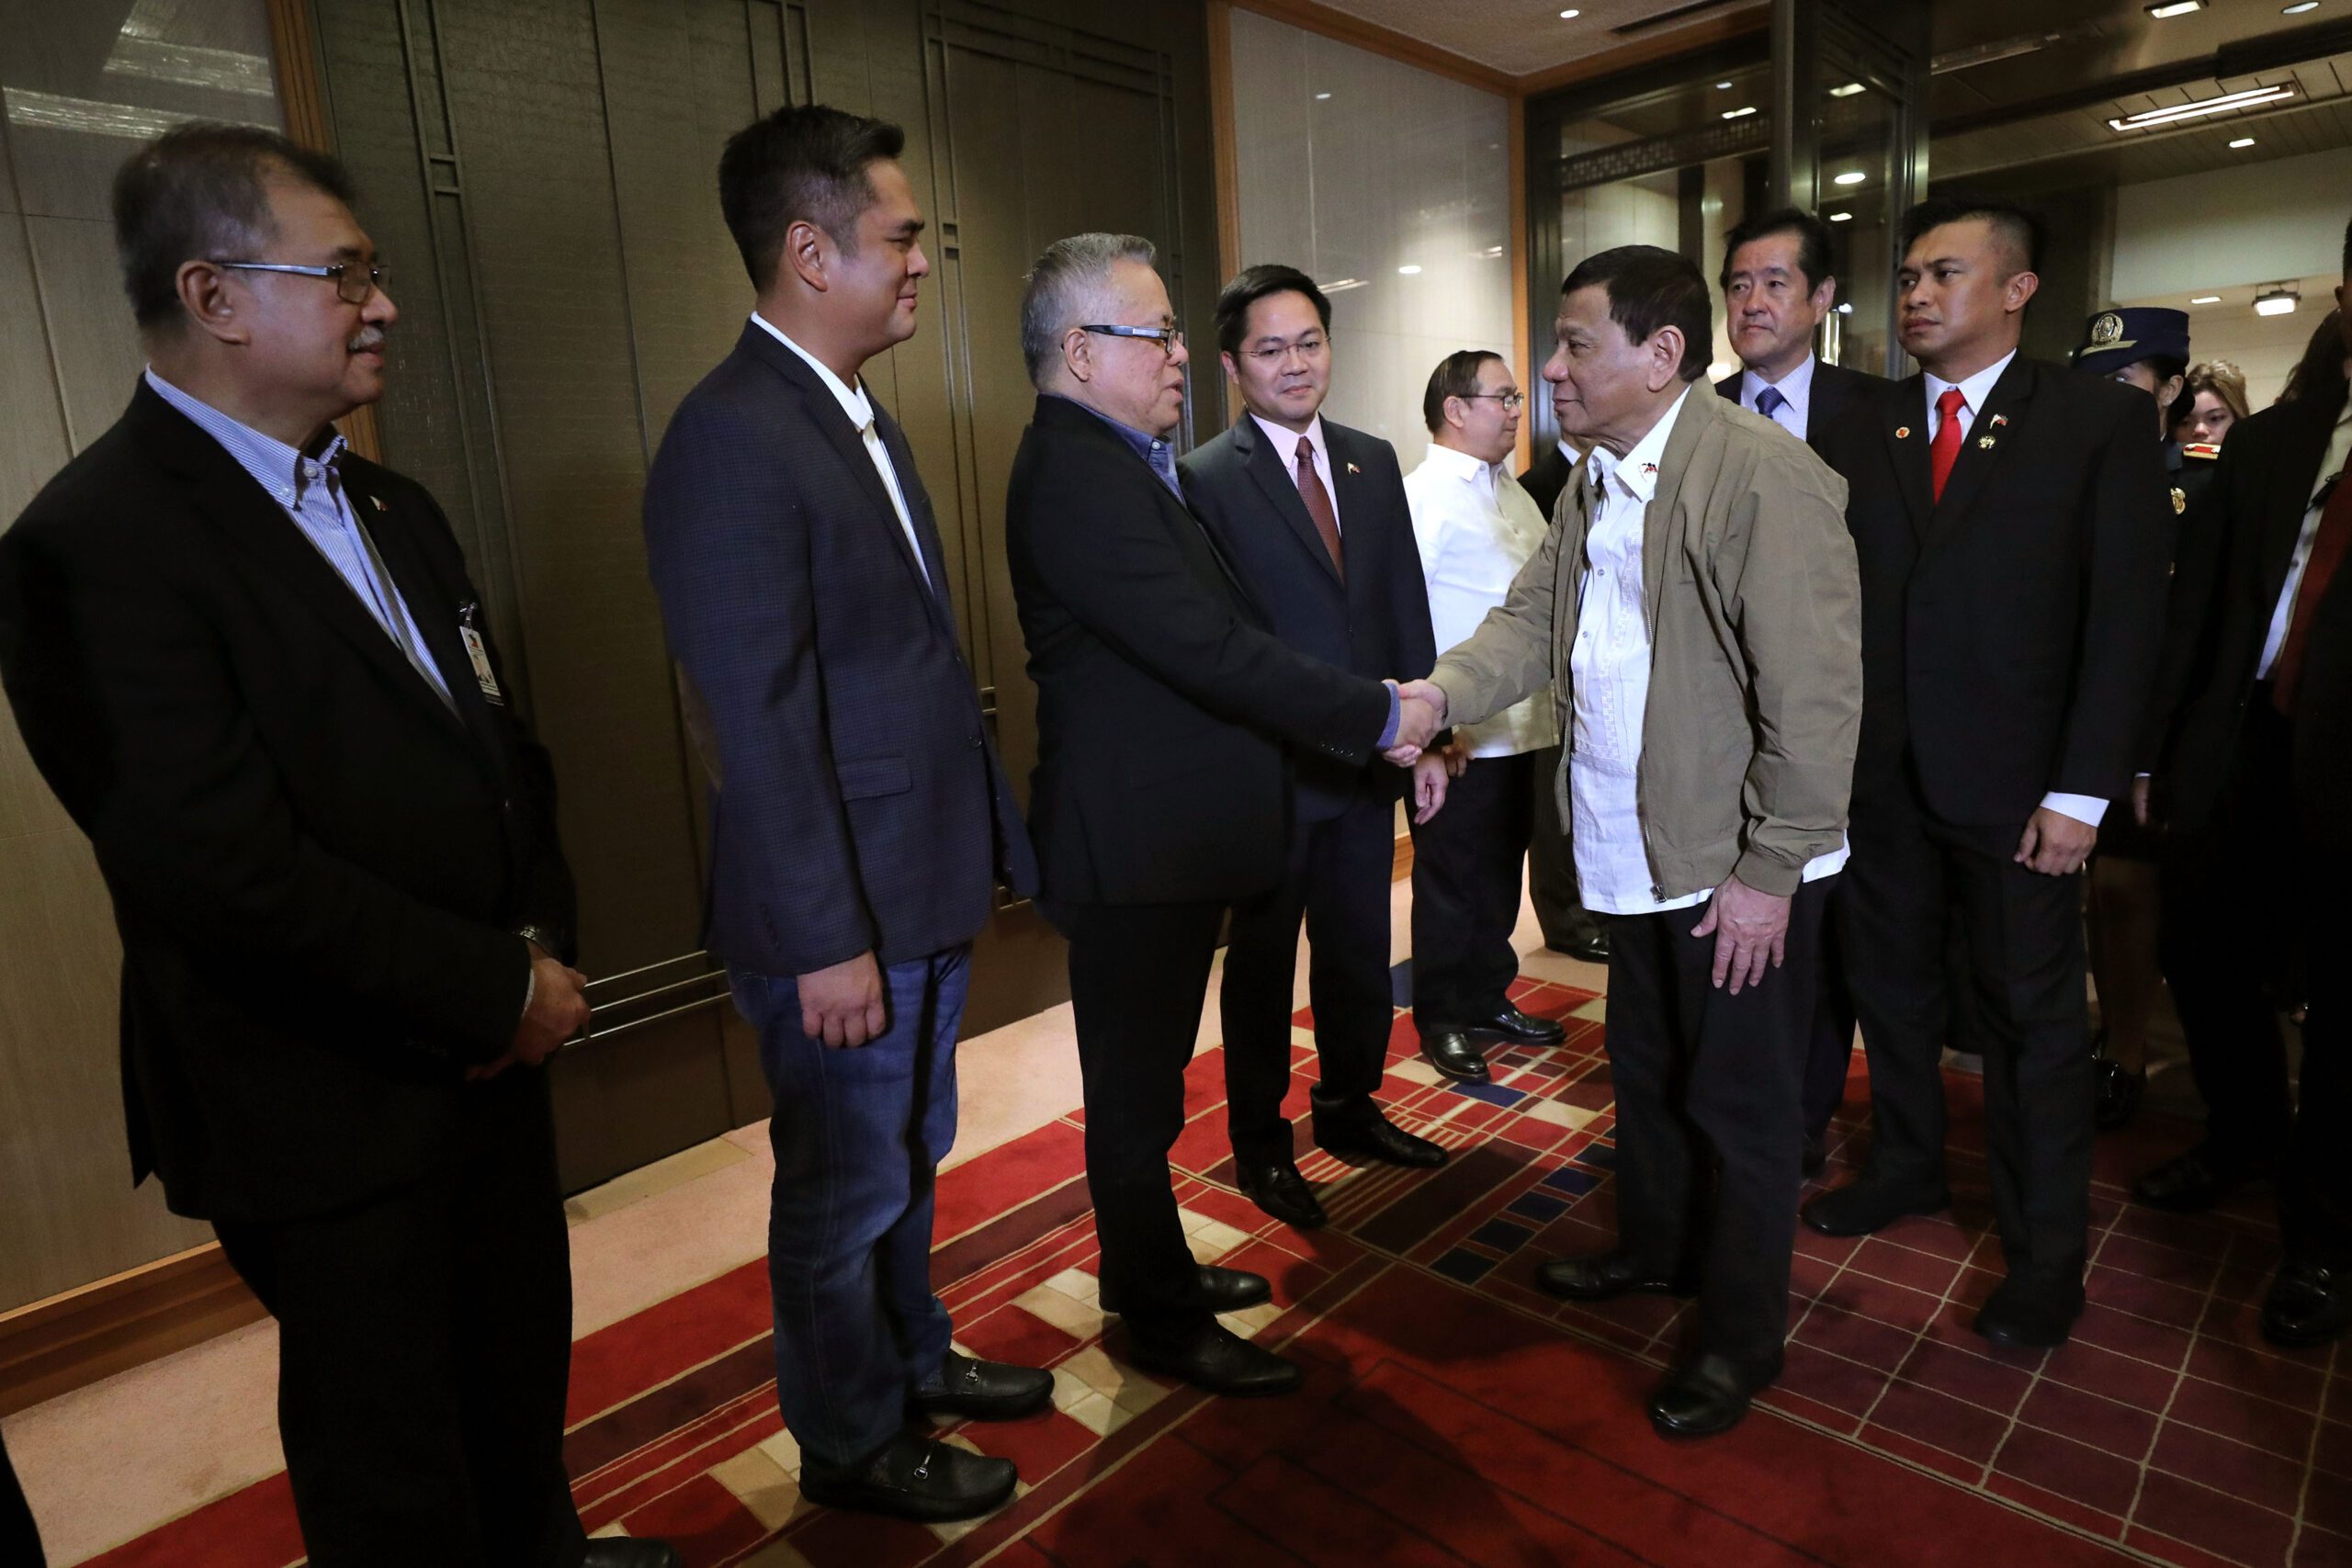 Japan trip not post-elections ‘reward’ for Duterte Cabinet – Malacañang